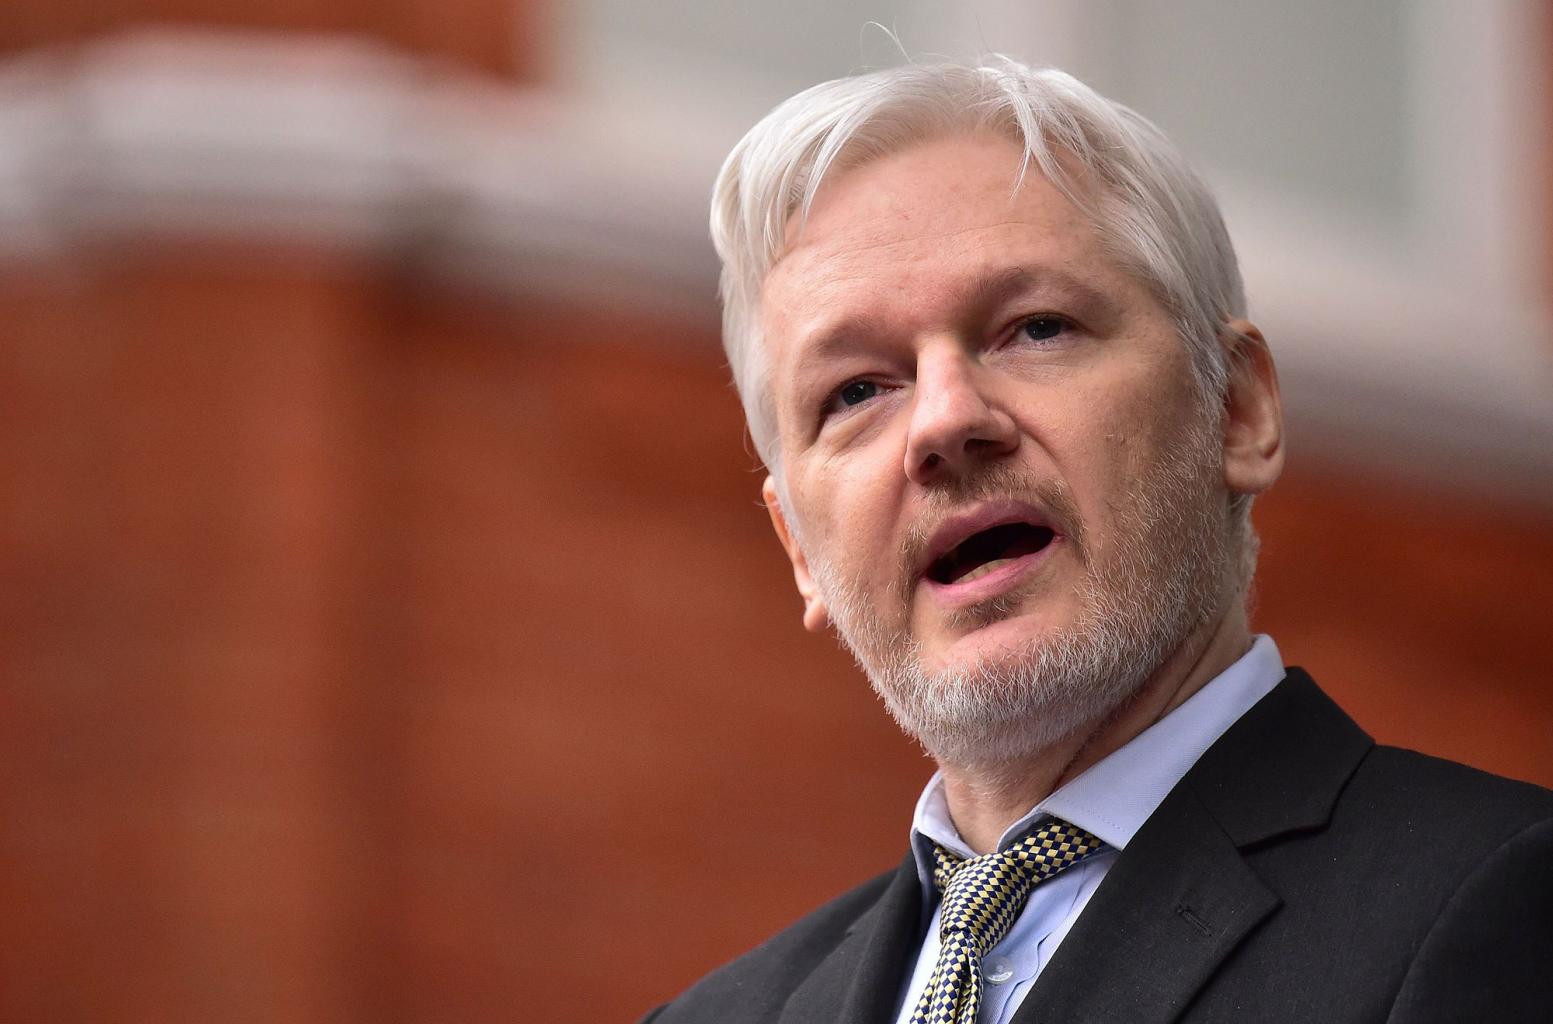 Swedish Authorities Drop Rape Charges Against WikiLeaks      '  Julian Assange but He Might Still Face Arrest in U.K.